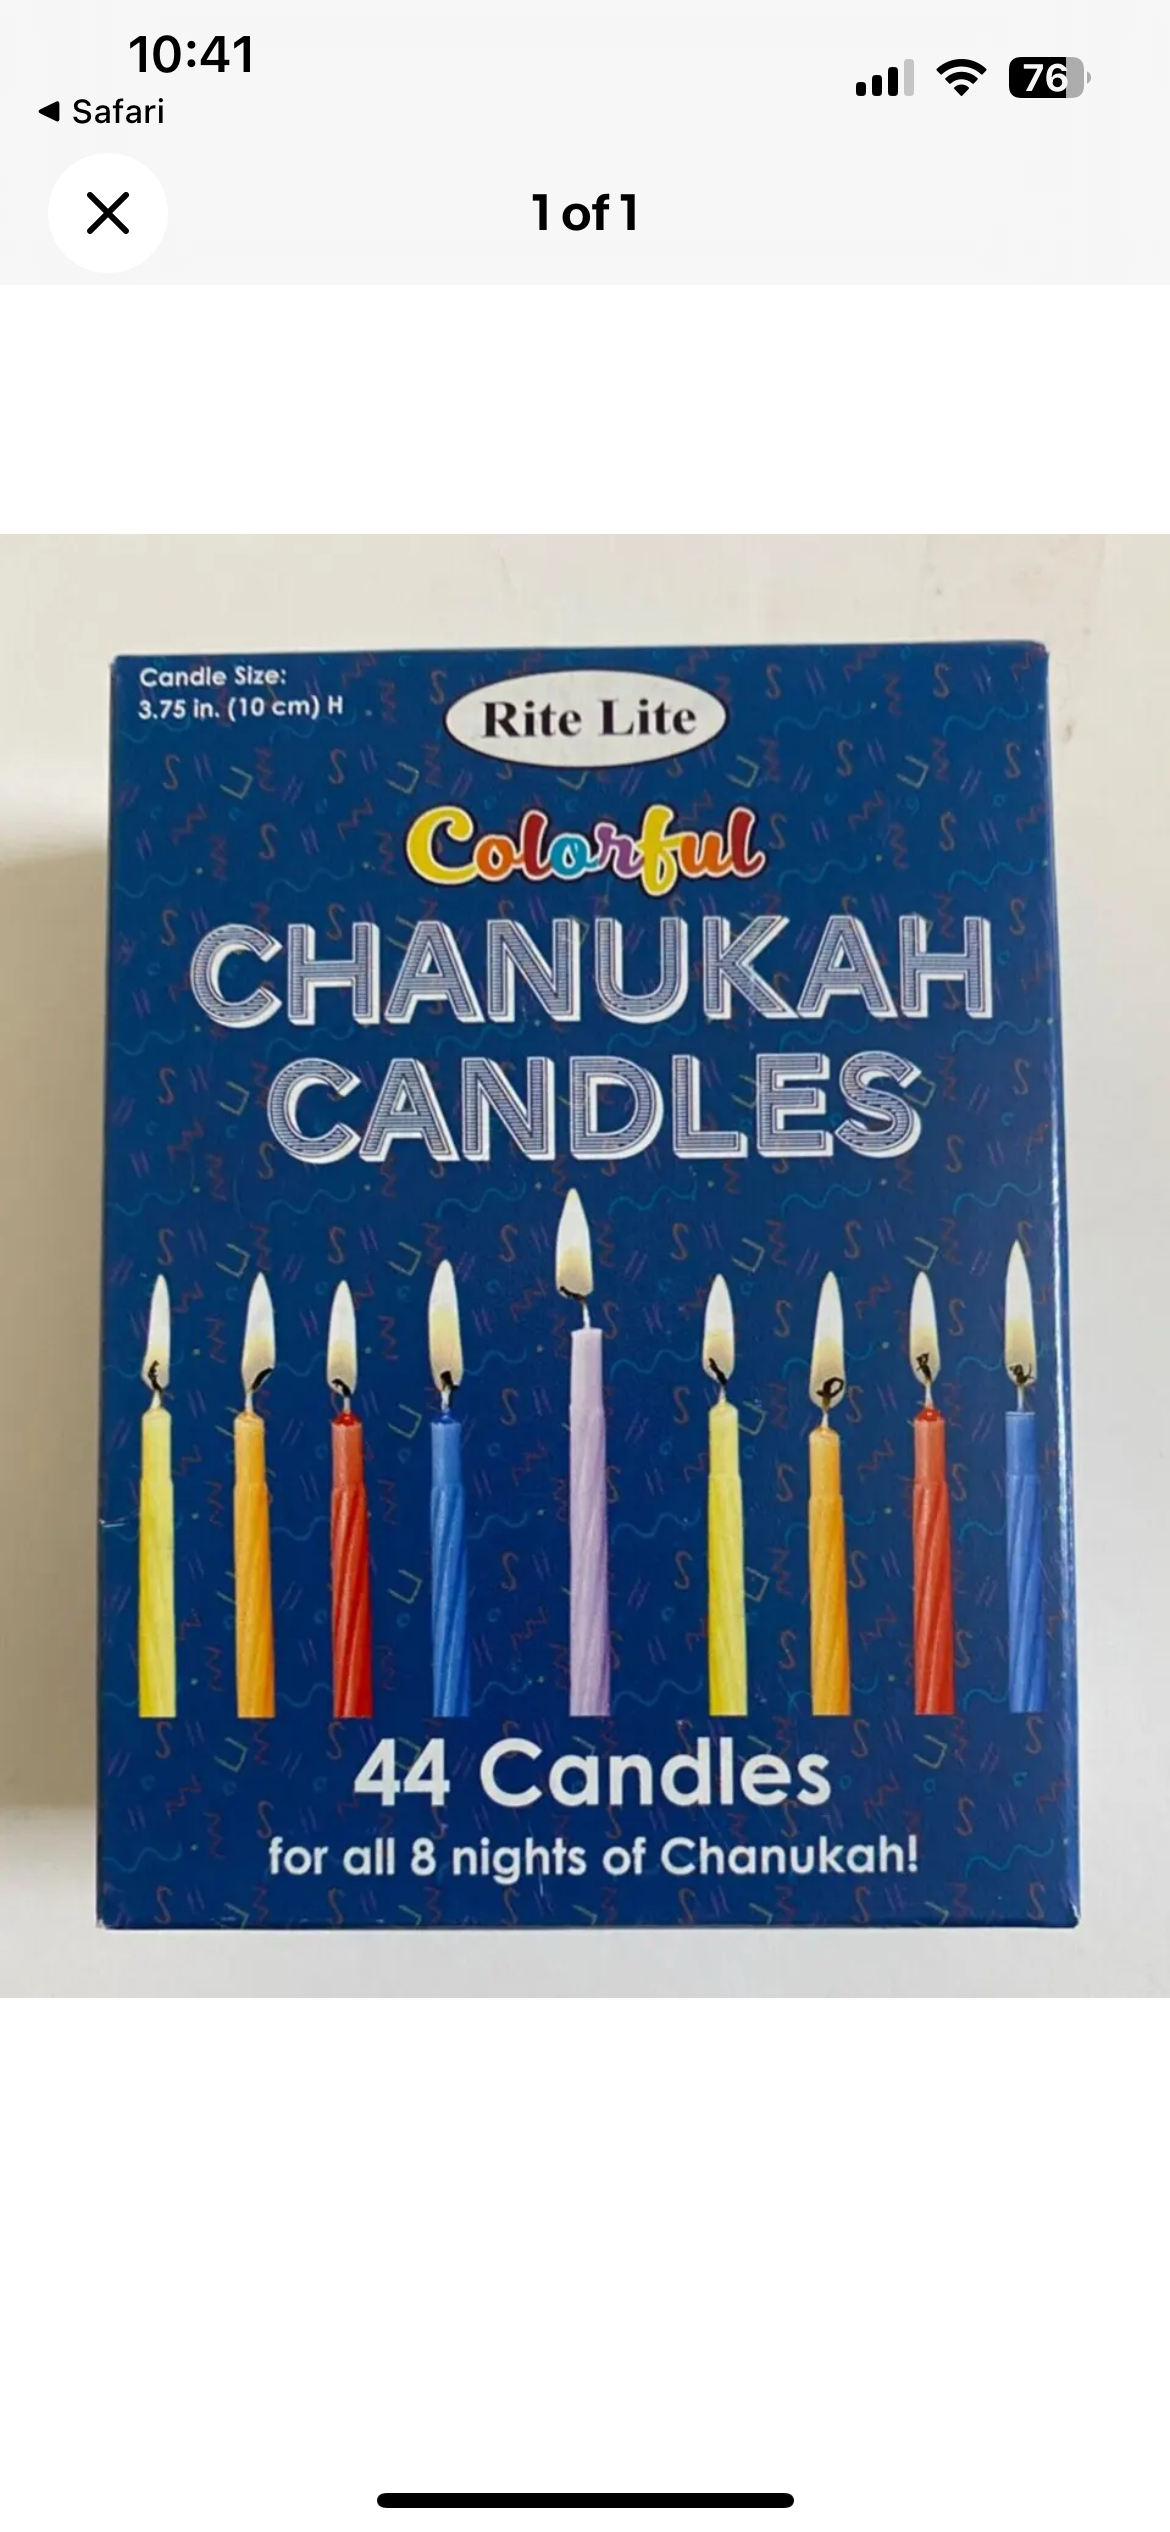 Colorful Chanukah Candles- 44